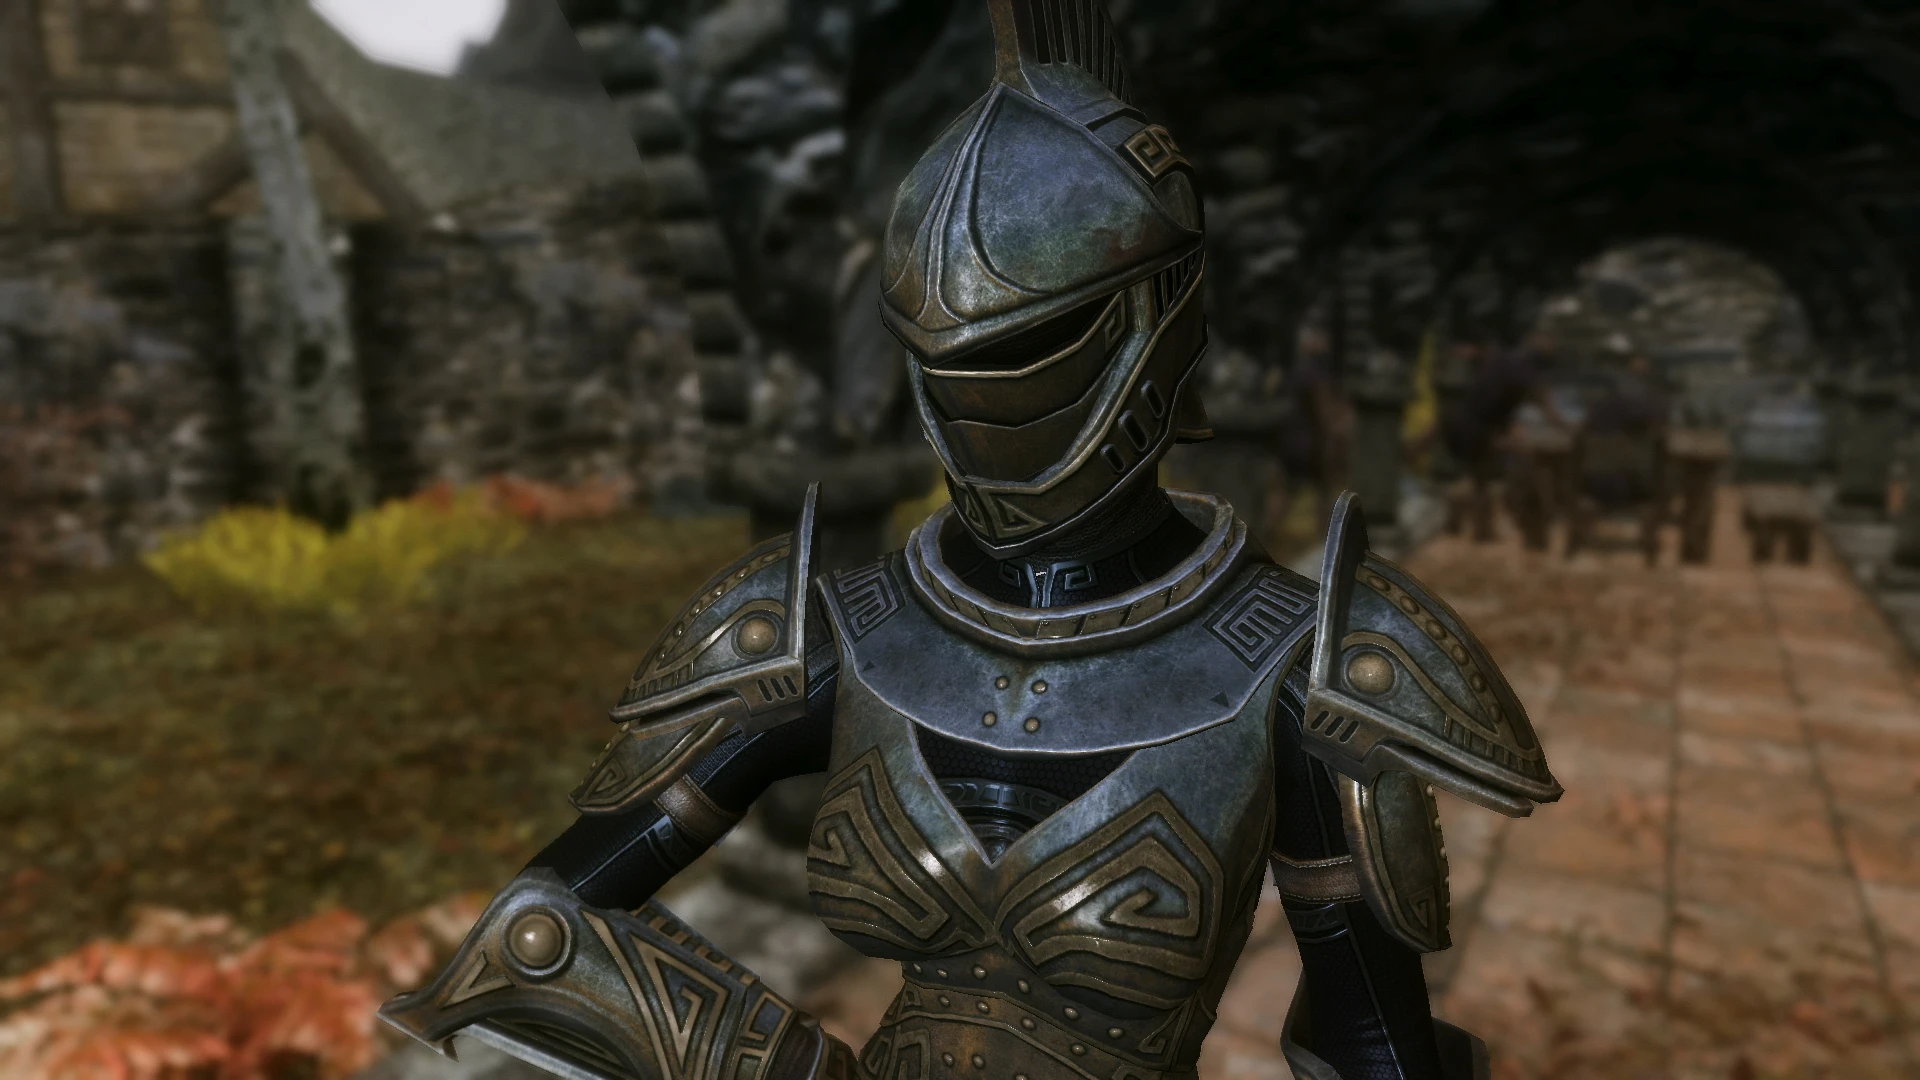 daedric armor and weapon improvement at skyrim nexus mods and community.